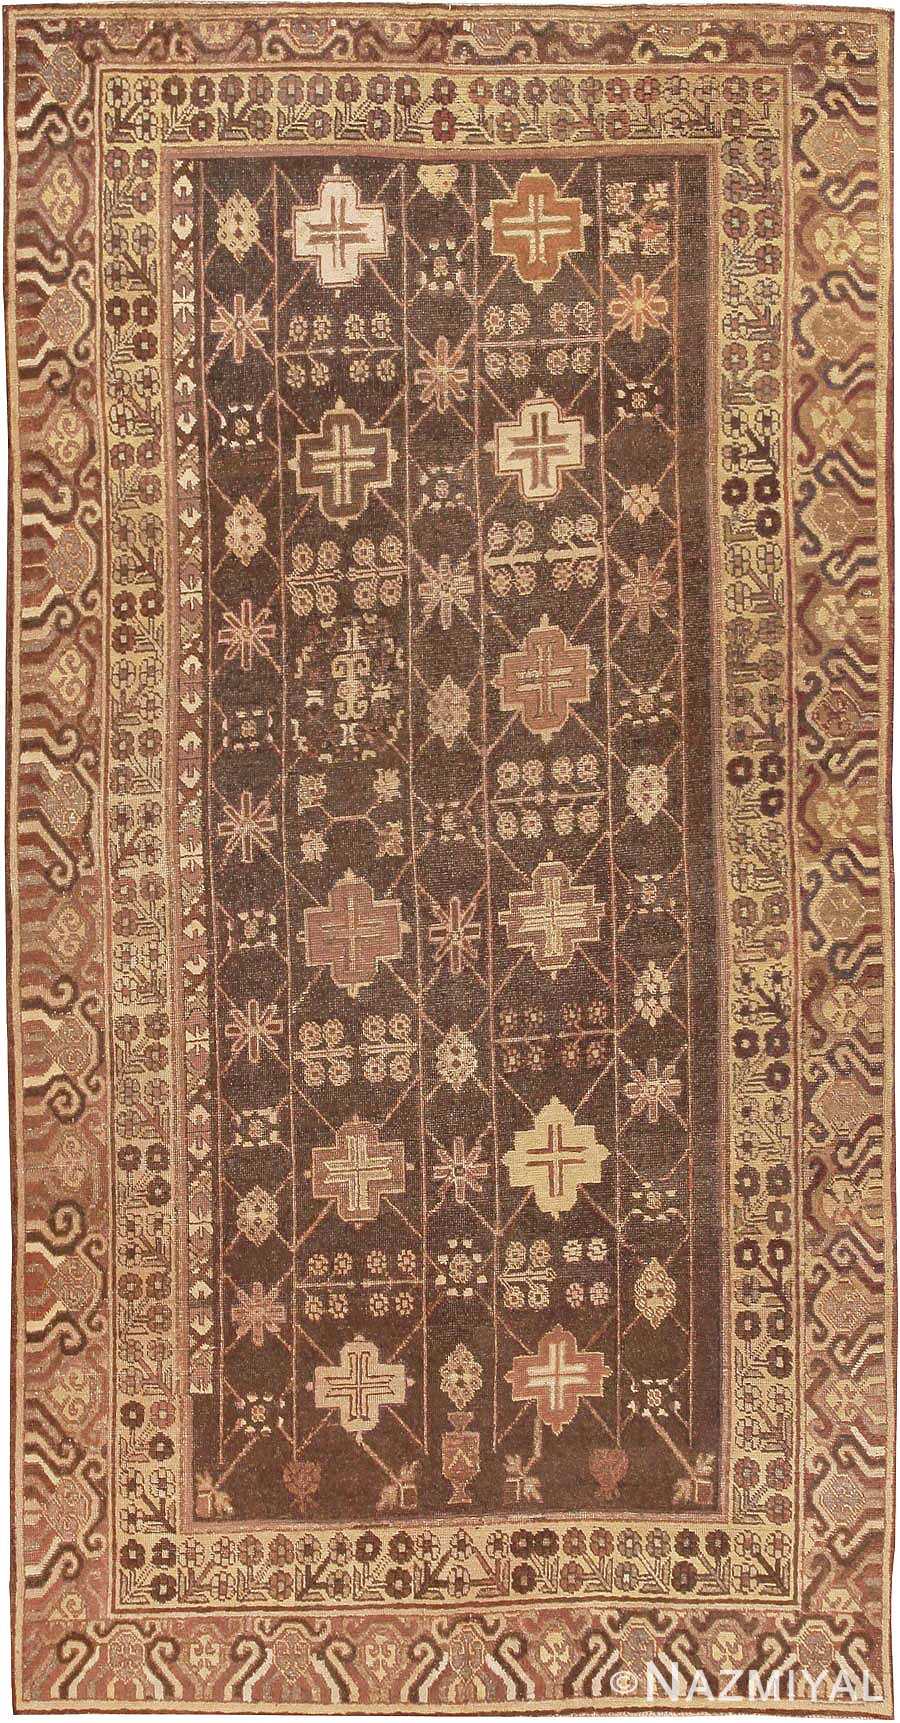 Tribal Brown Antique Khotan Rug #44546 by Nazmiyal Antique Rugs